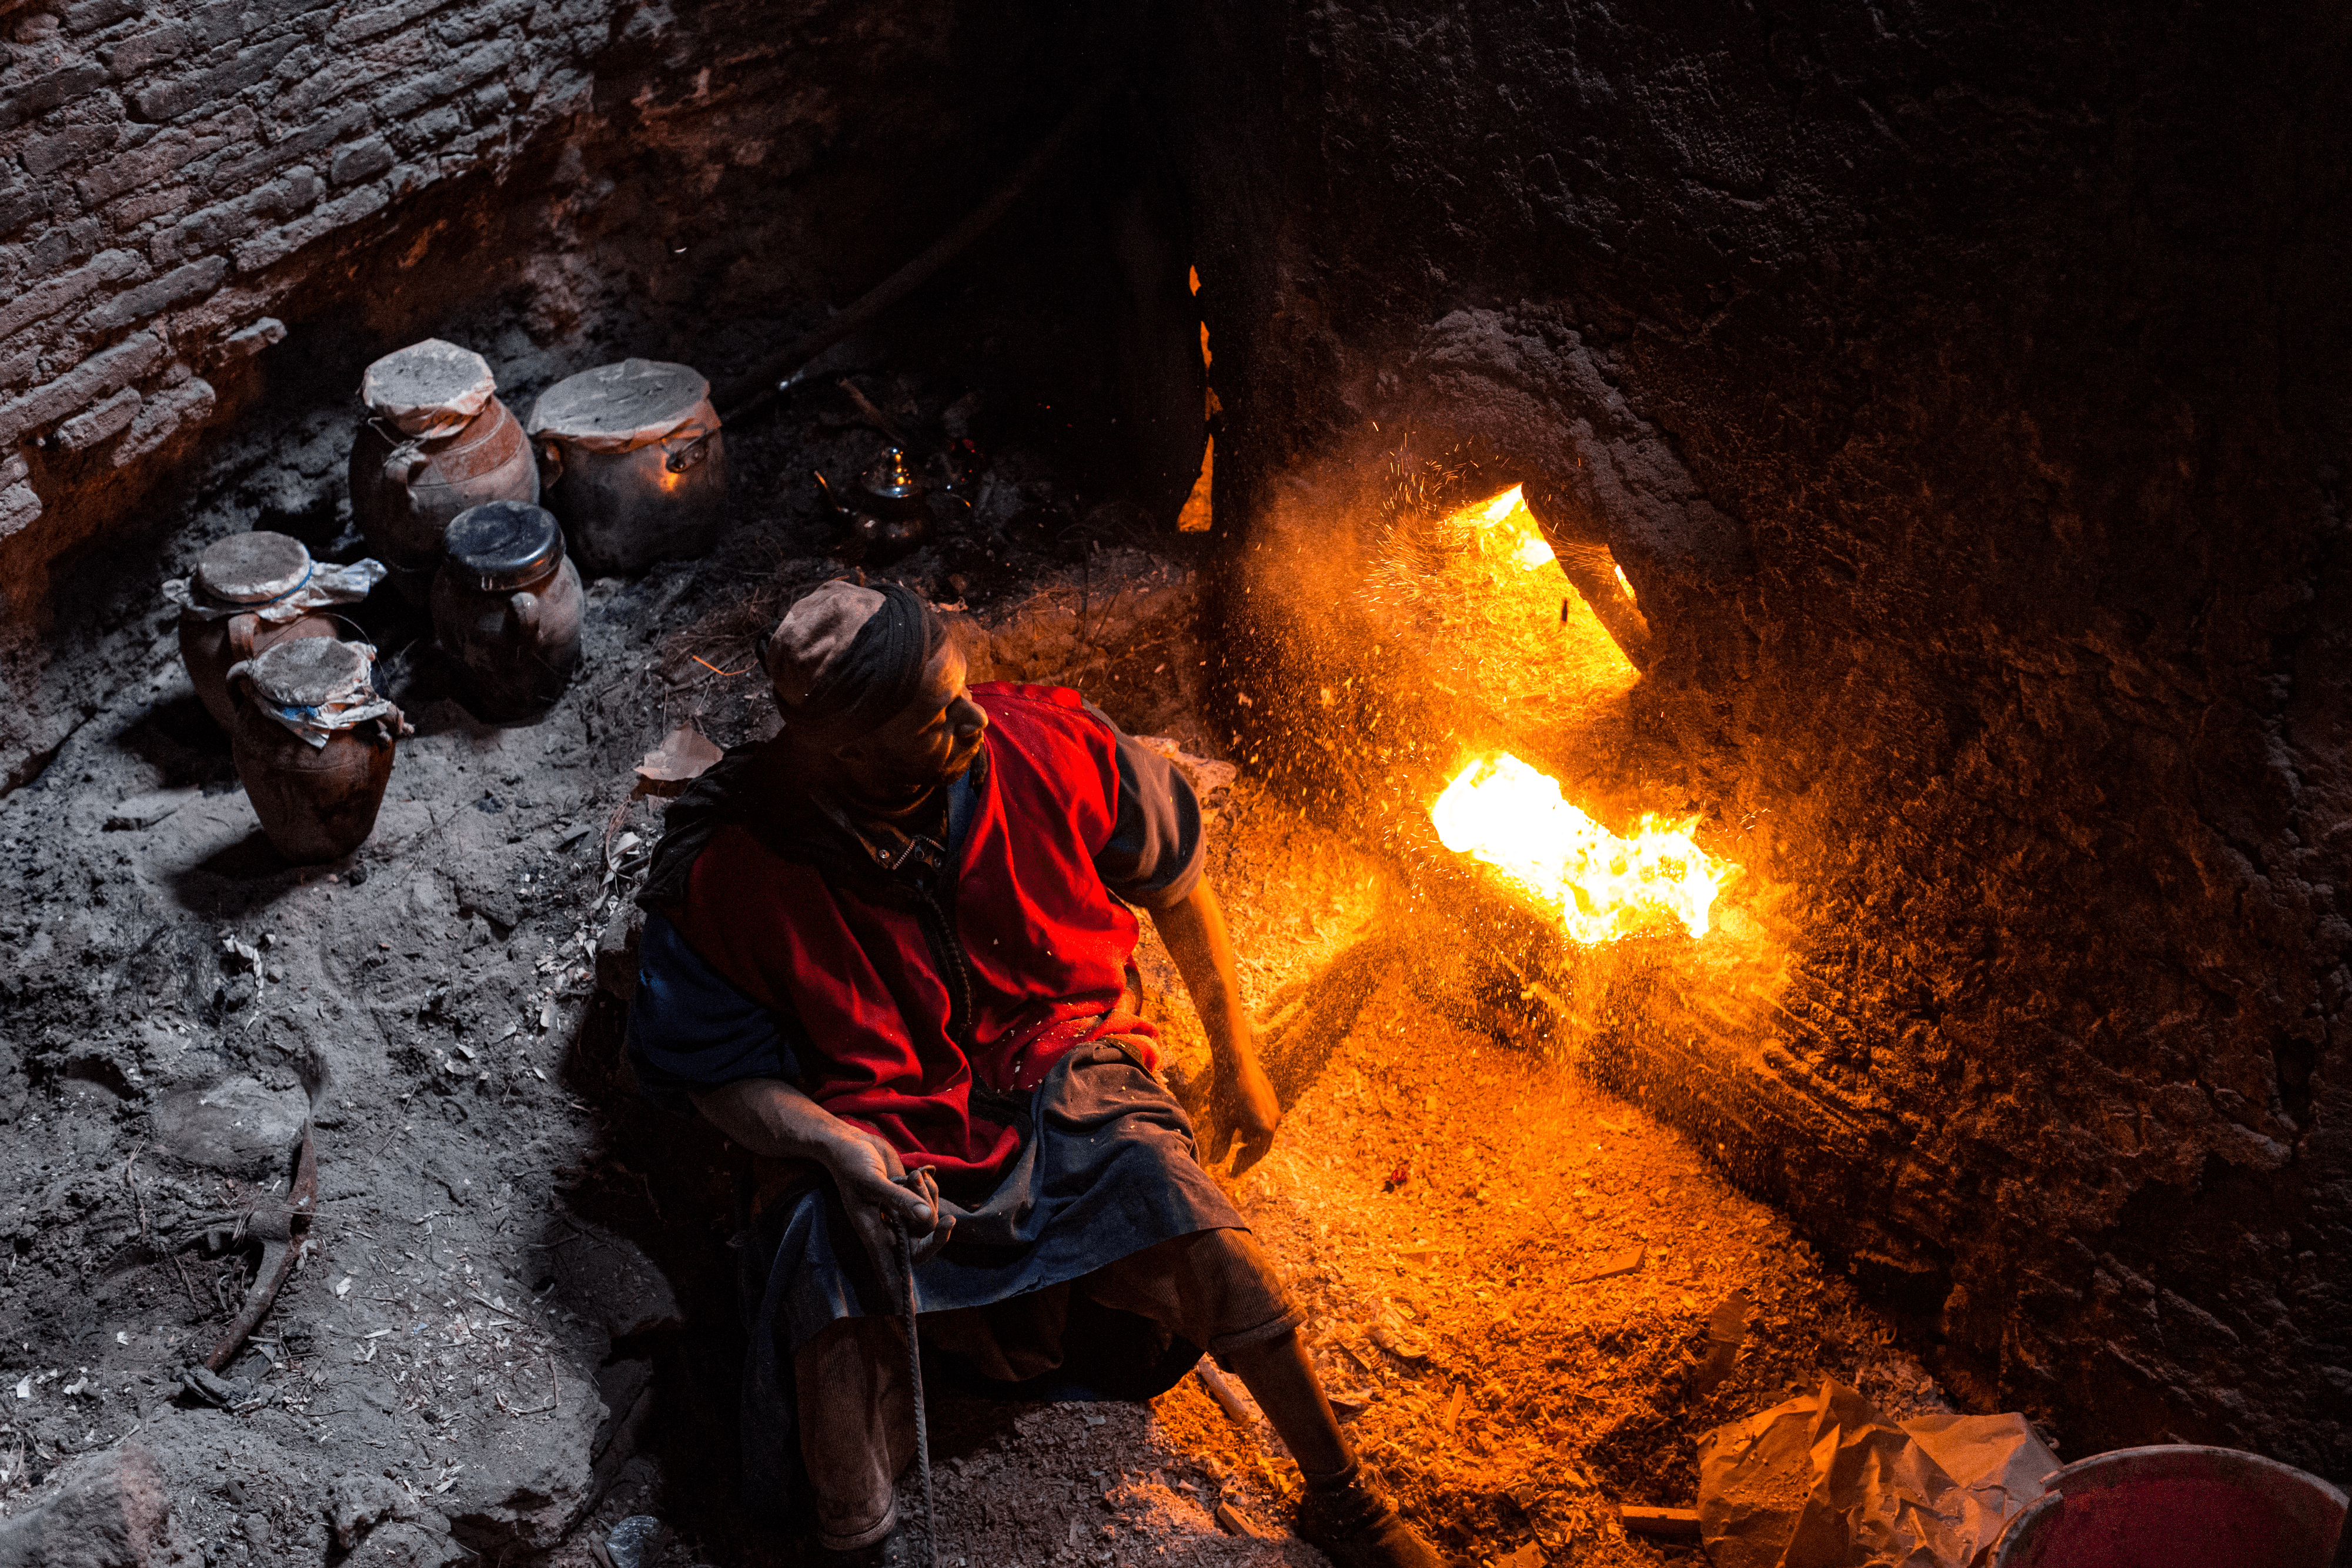 The Gnaoua feeding the hammam furnace in Marrakech, Morocco